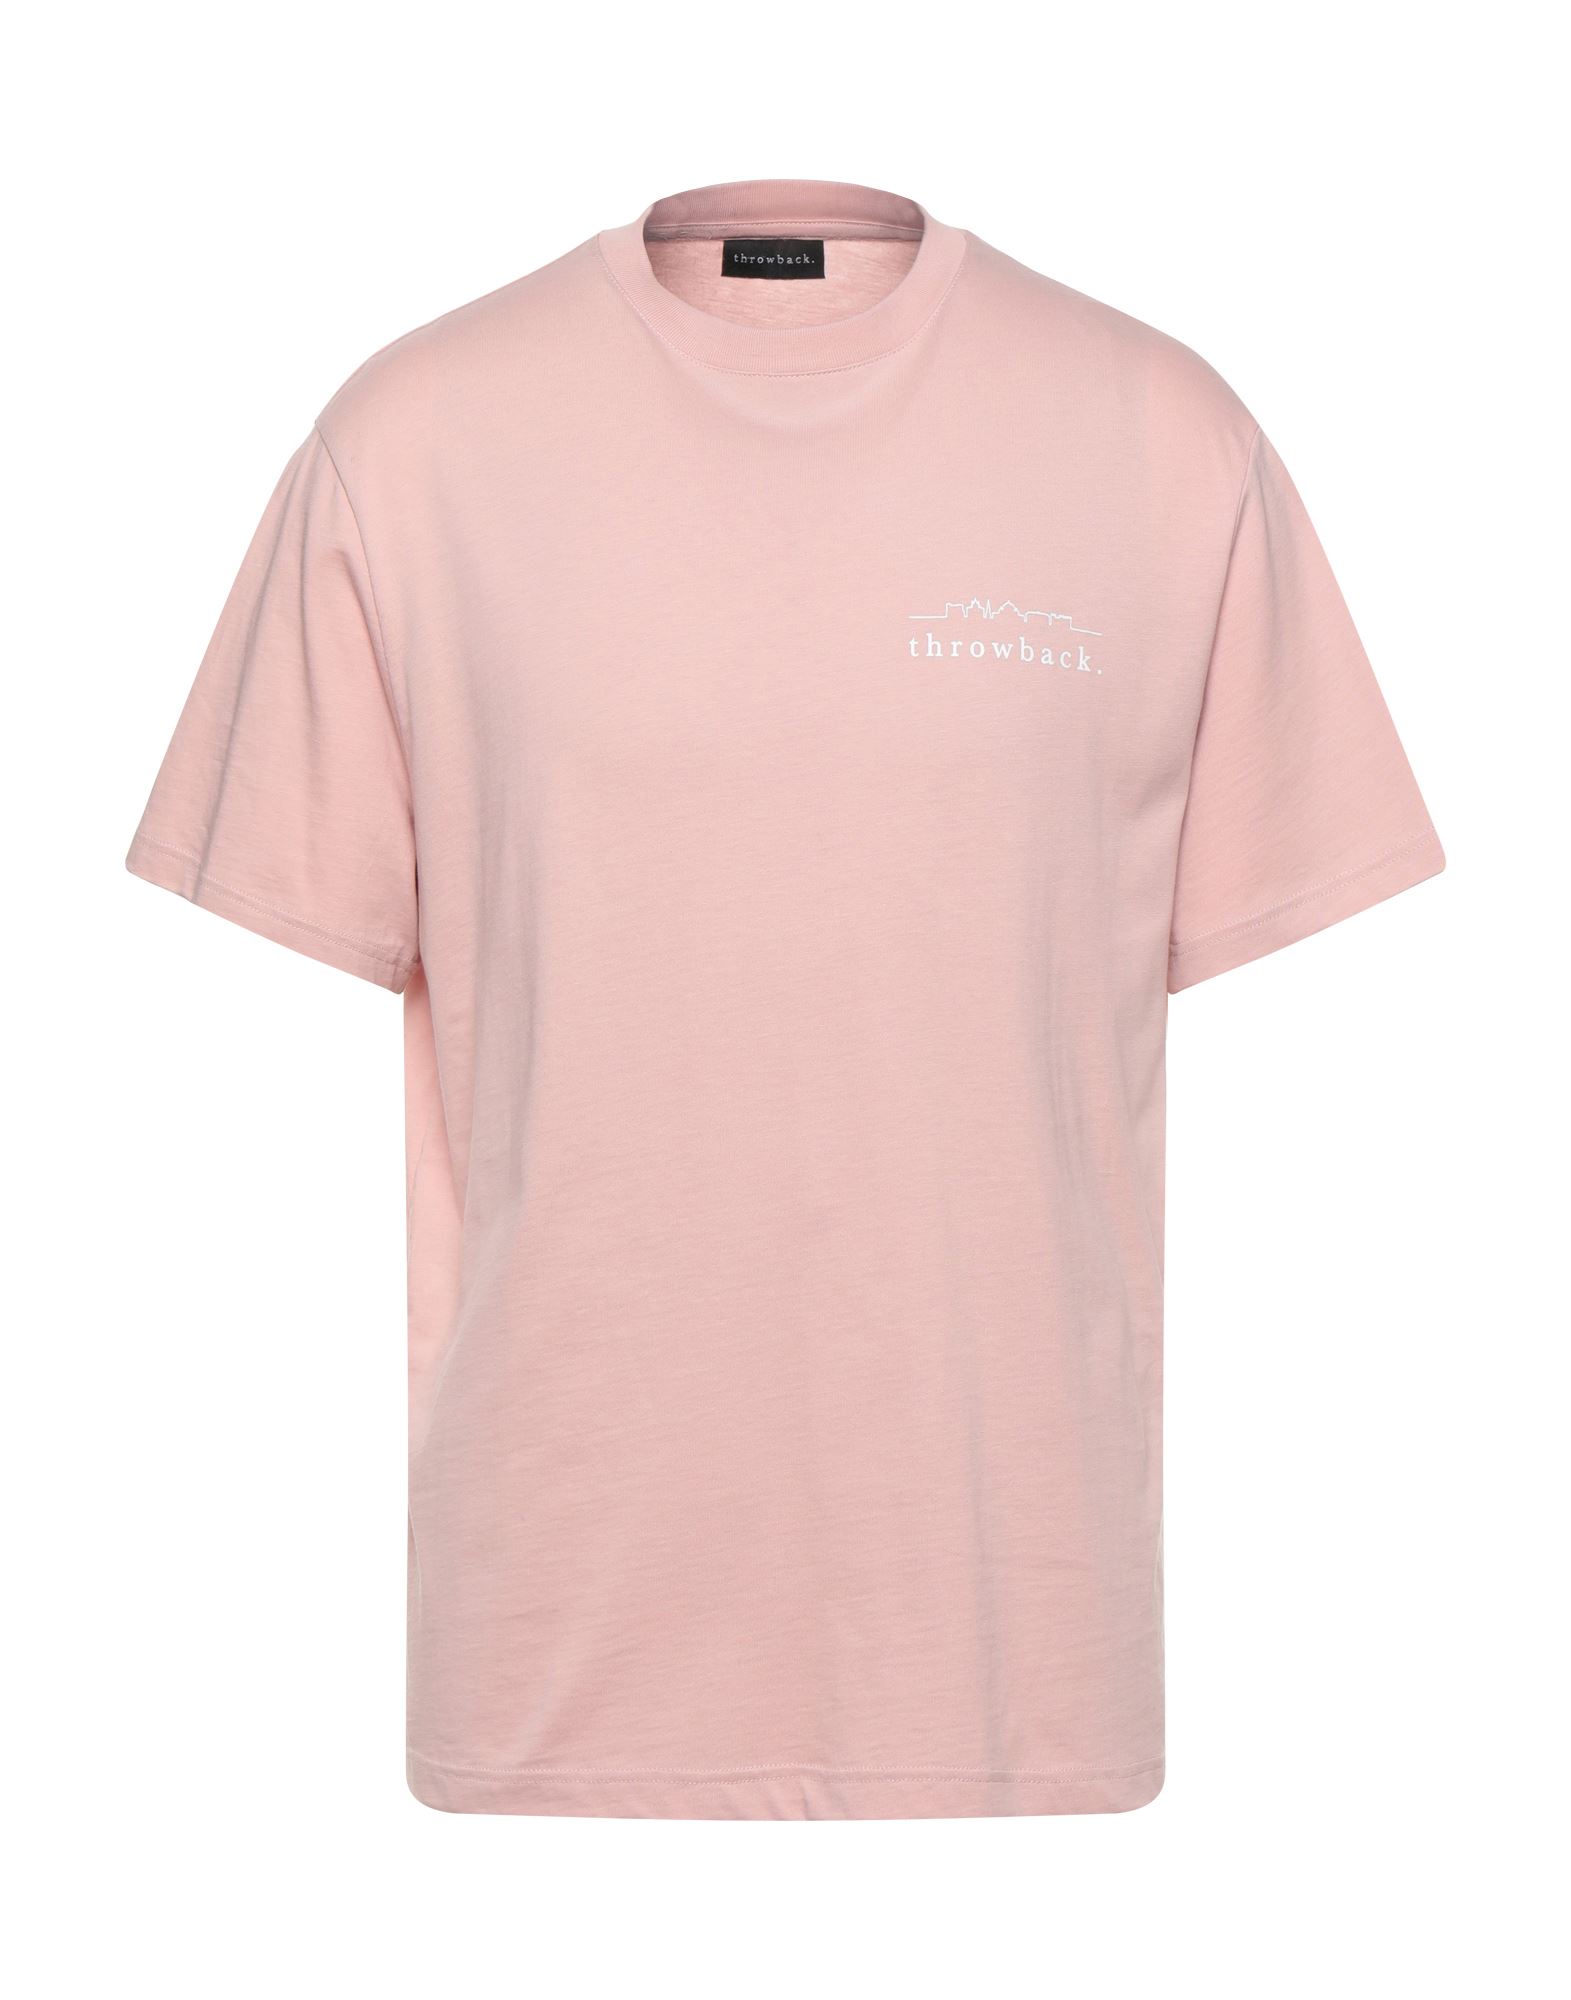 Shop Throwback . Man T-shirt Pink Size S Cotton